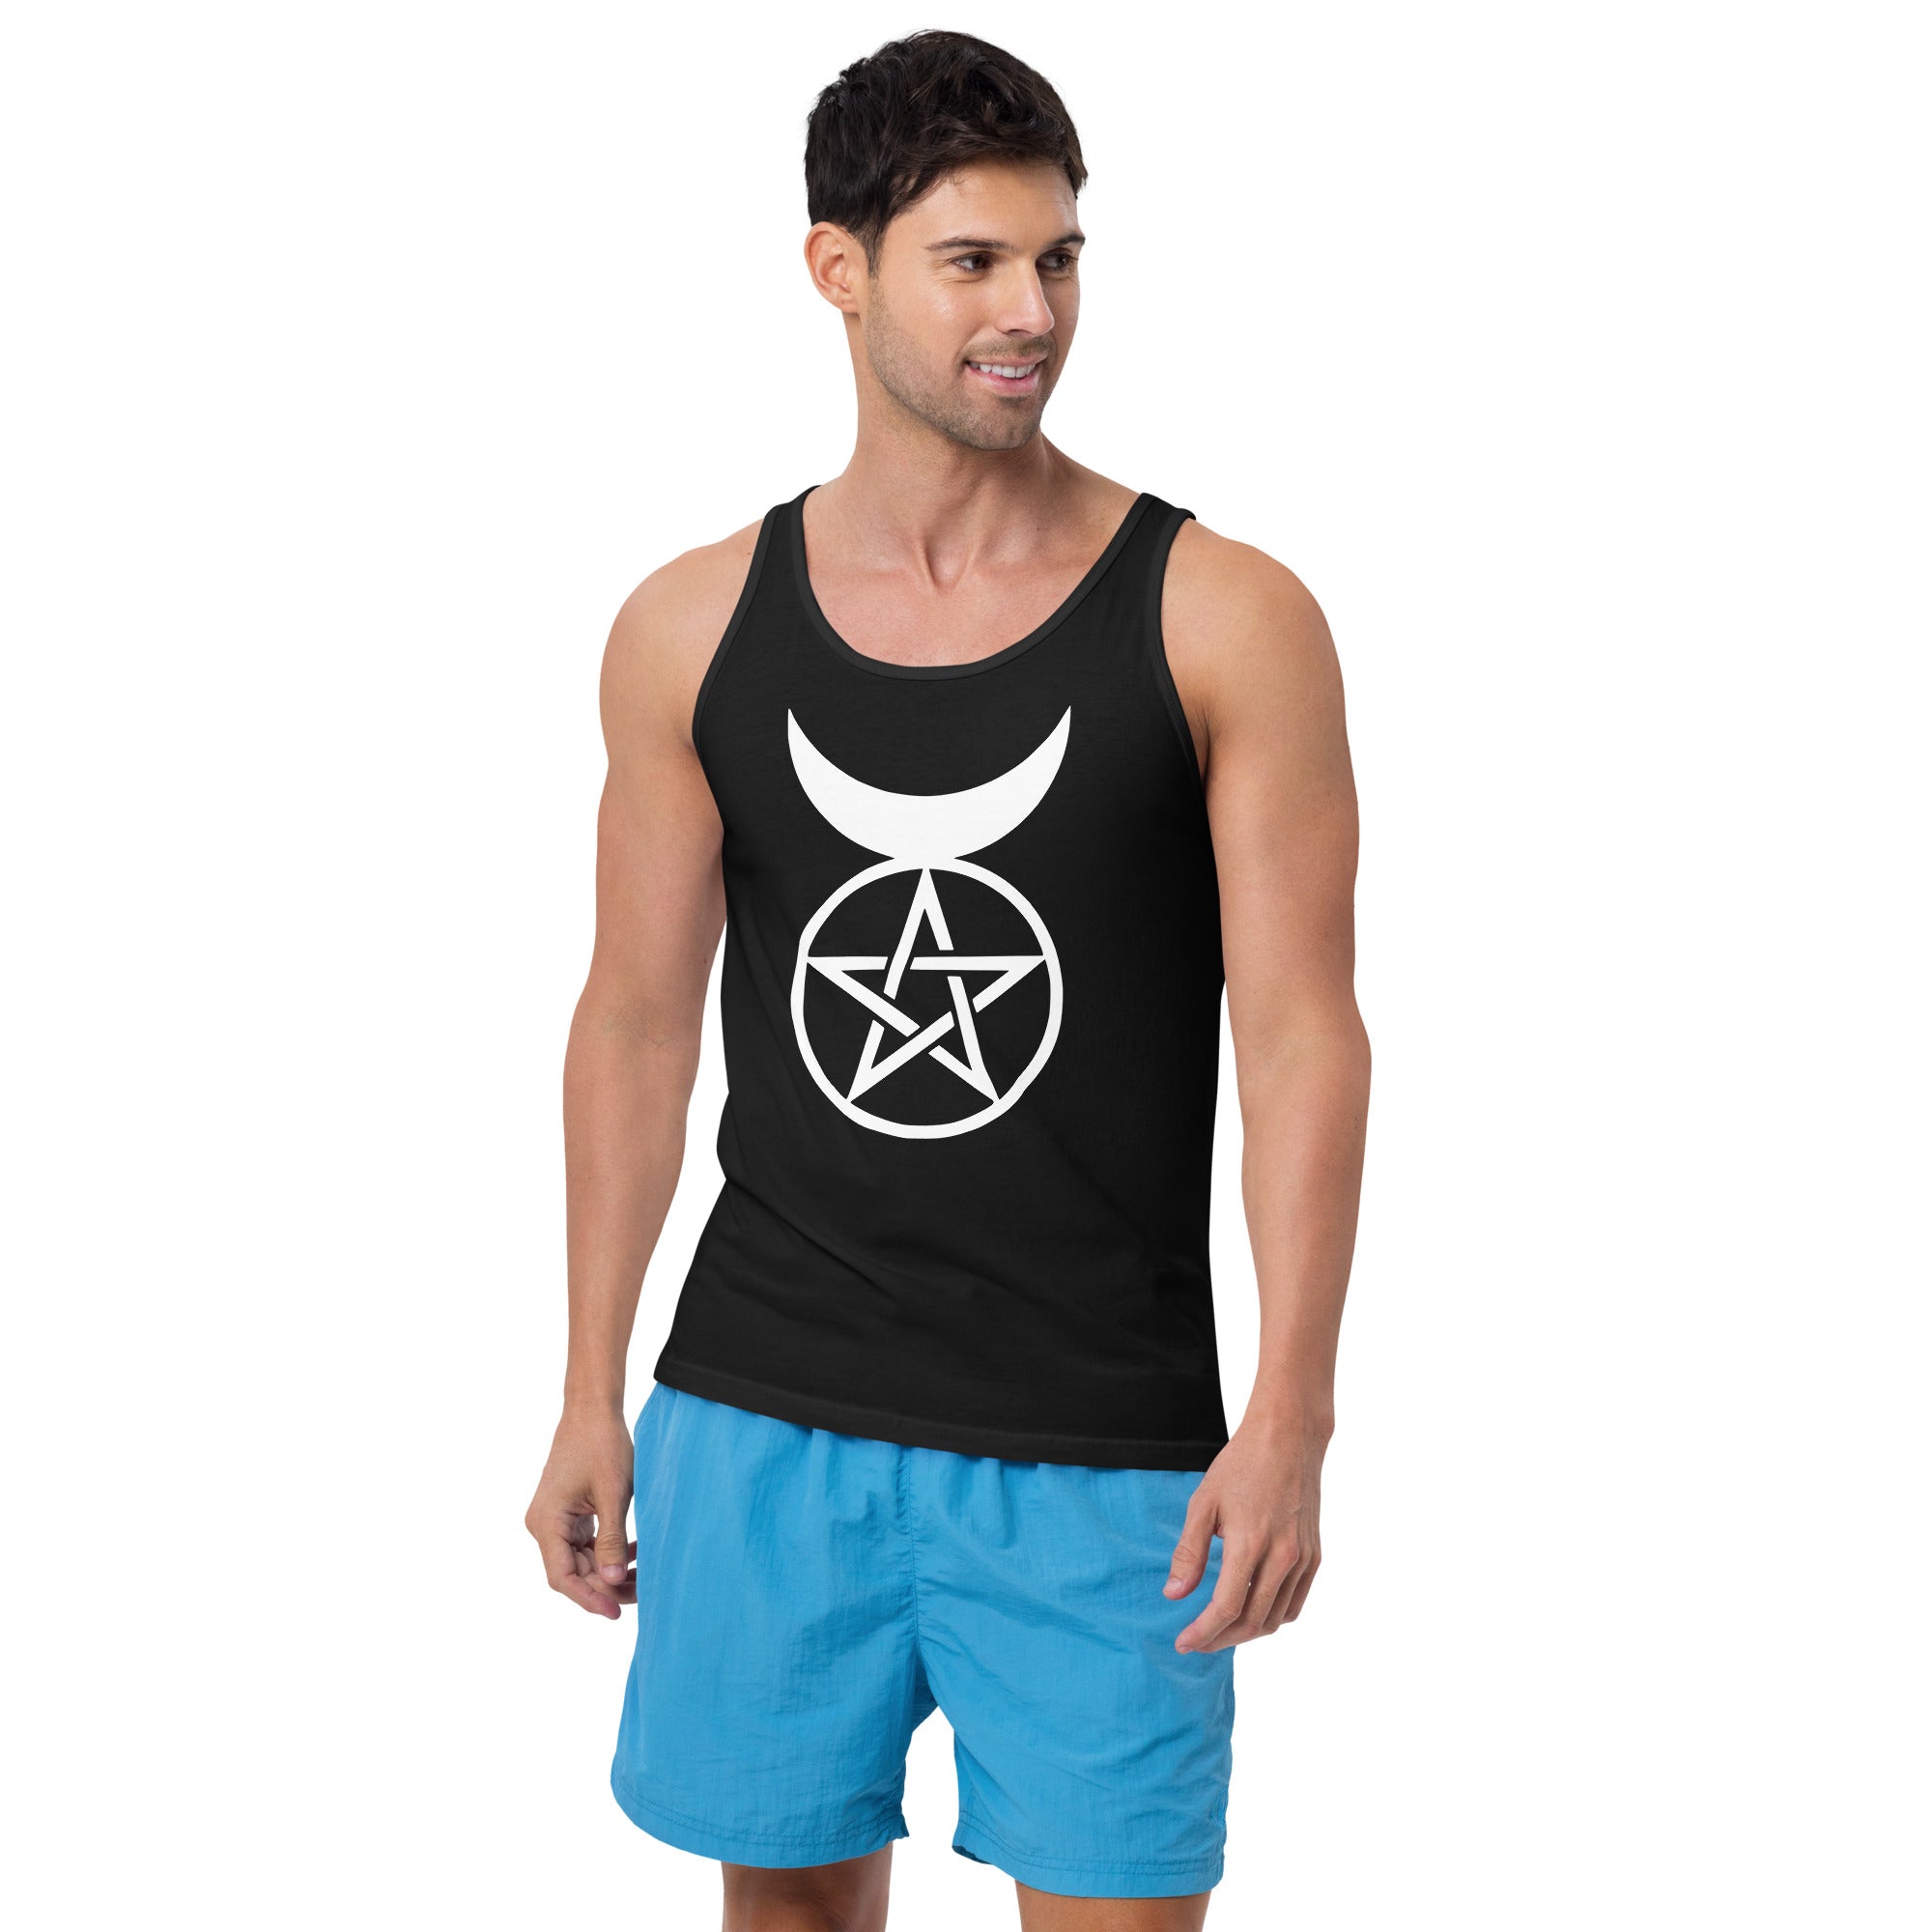 The Horned God Wicca Neopaganism Symbol Men's Tank Top Shirt